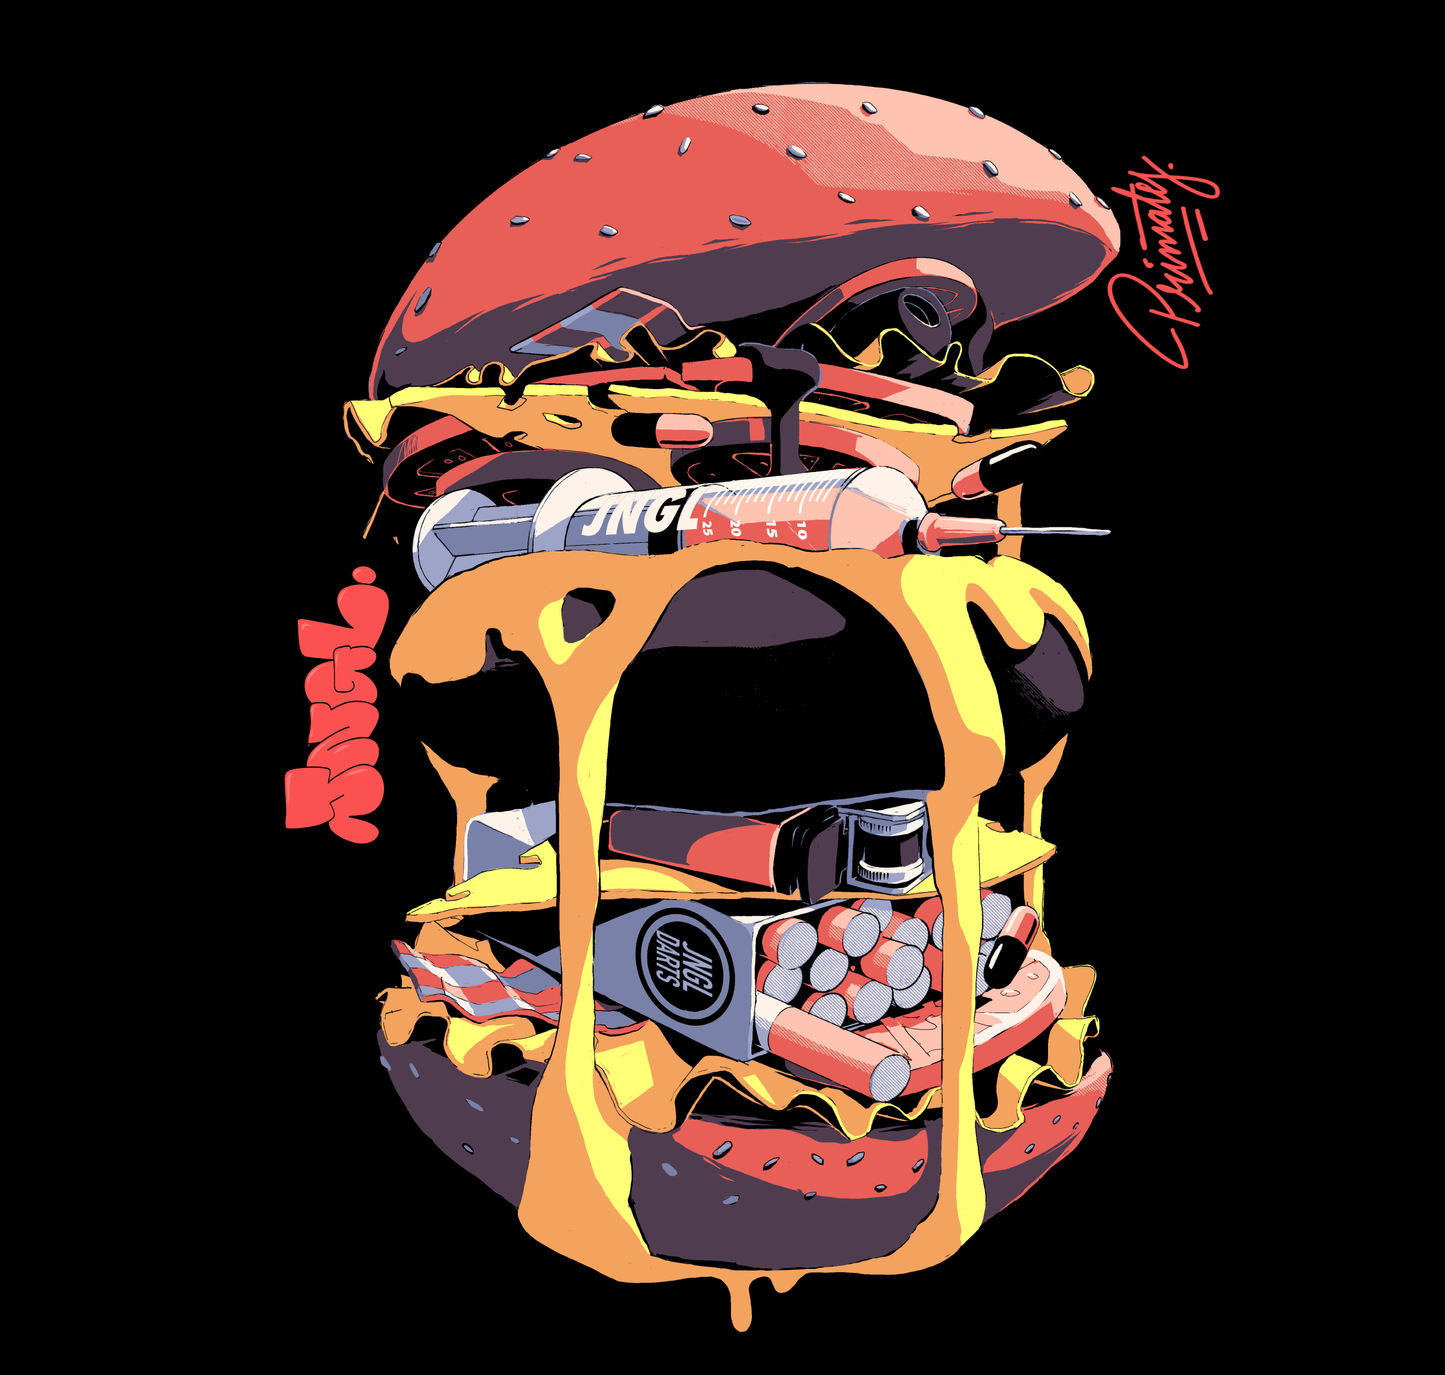 Toxic Burger T-Shirt